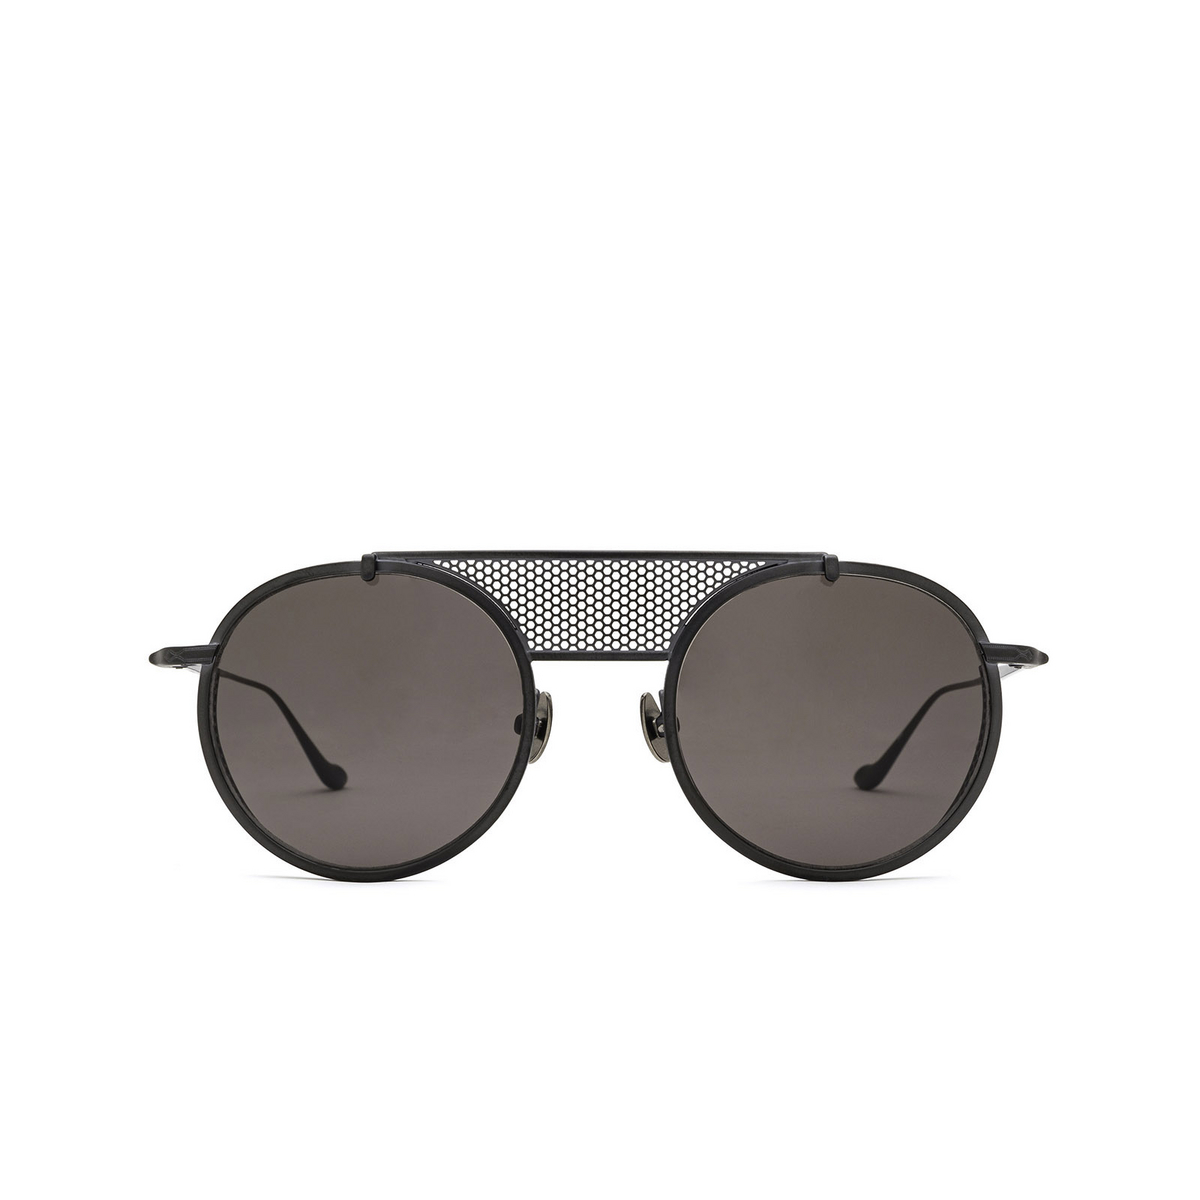 Matsuda® Round Sunglasses: M3097 color Mbk Matte Black - front view